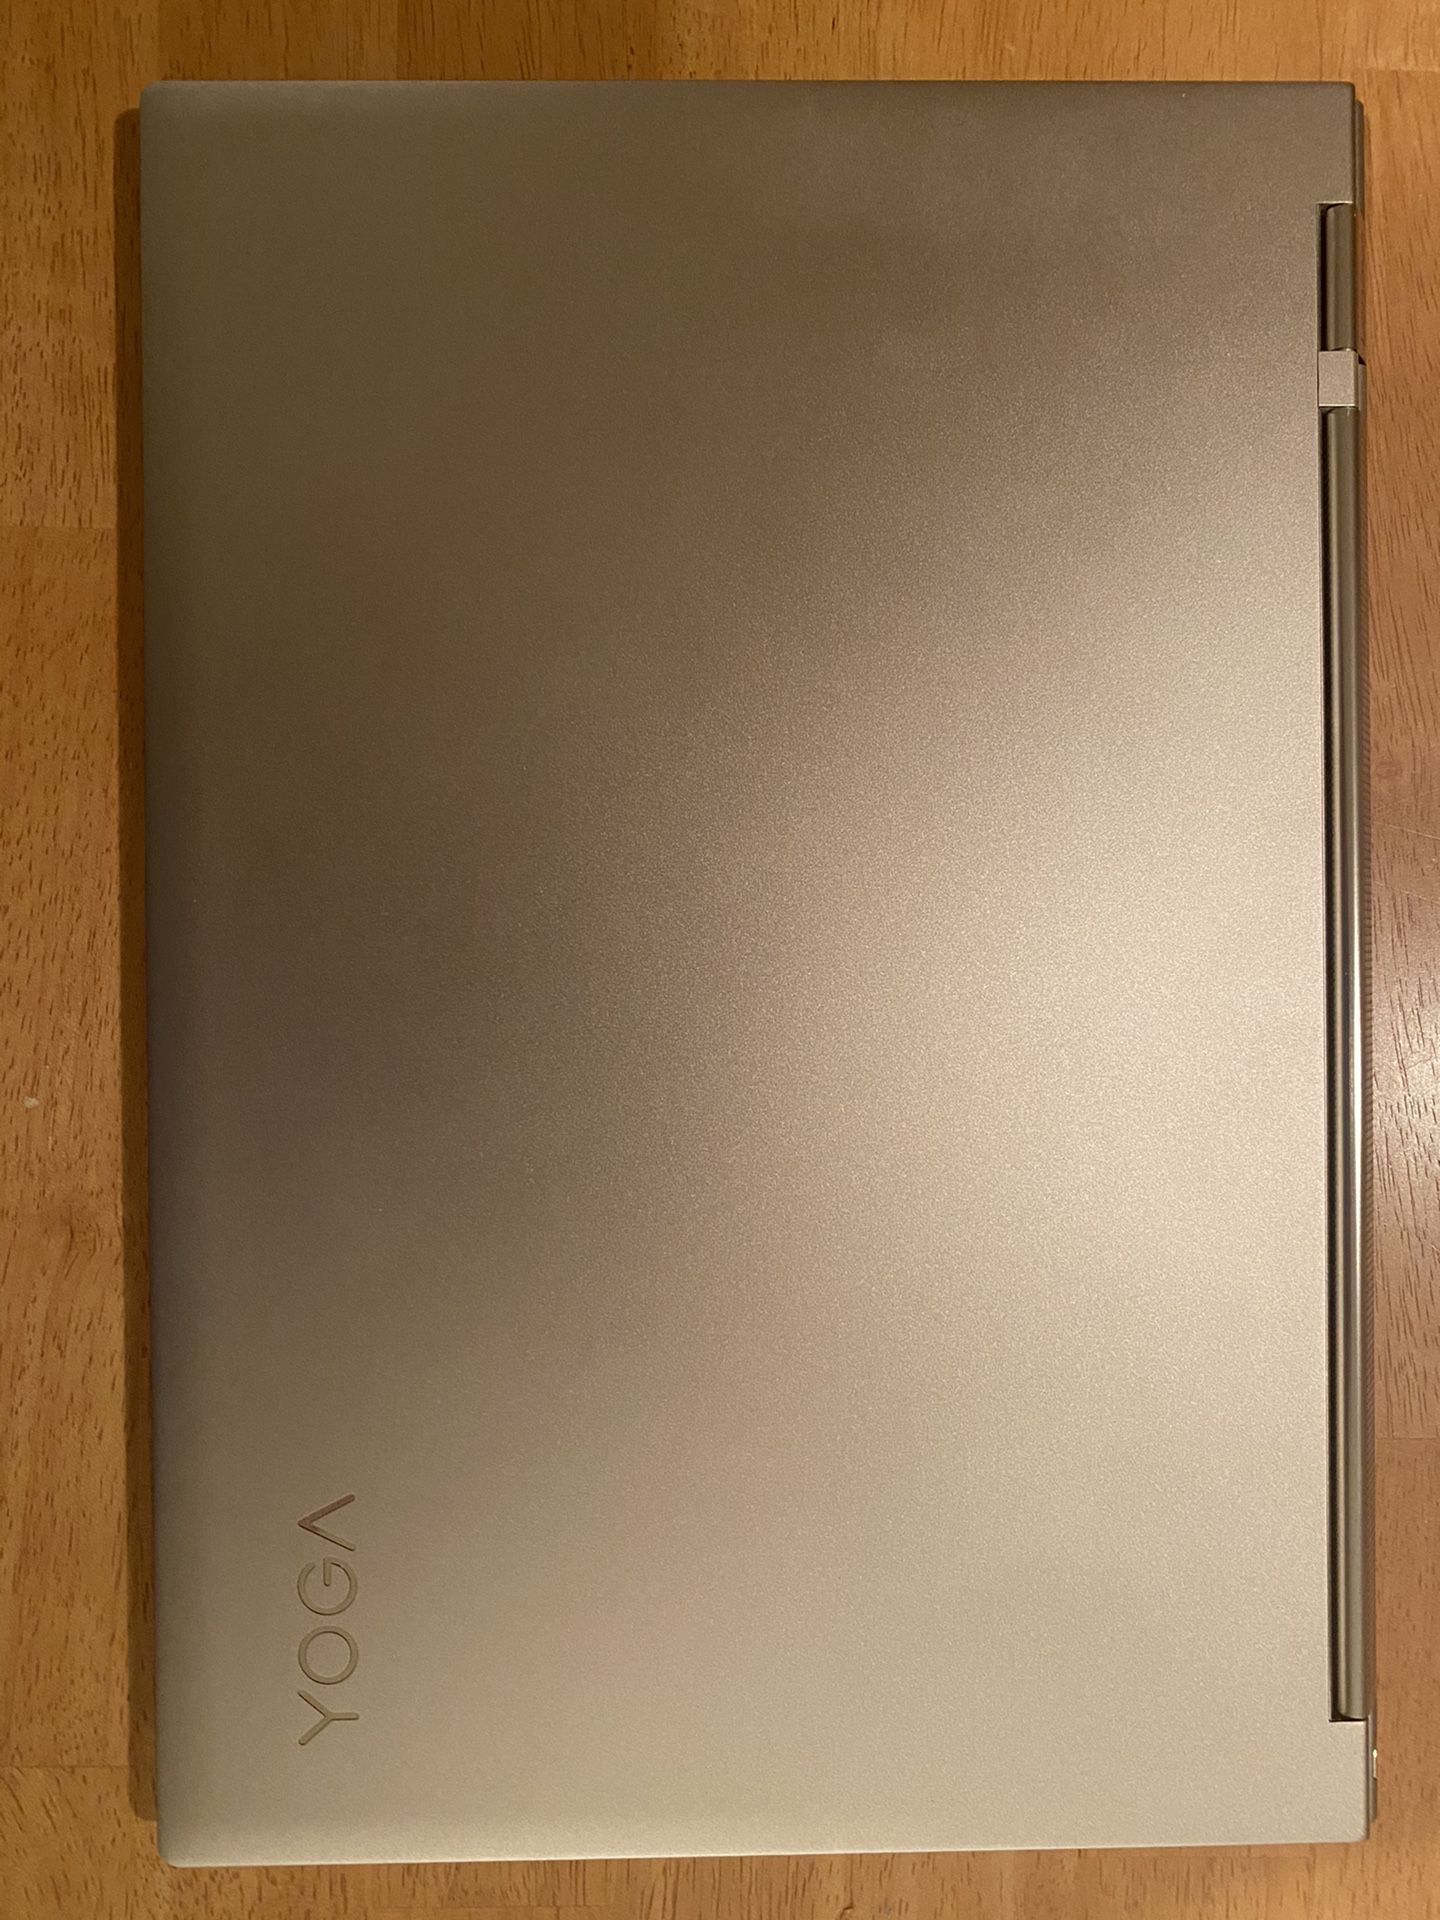 Lenovo Yoga c930 4k Laptop